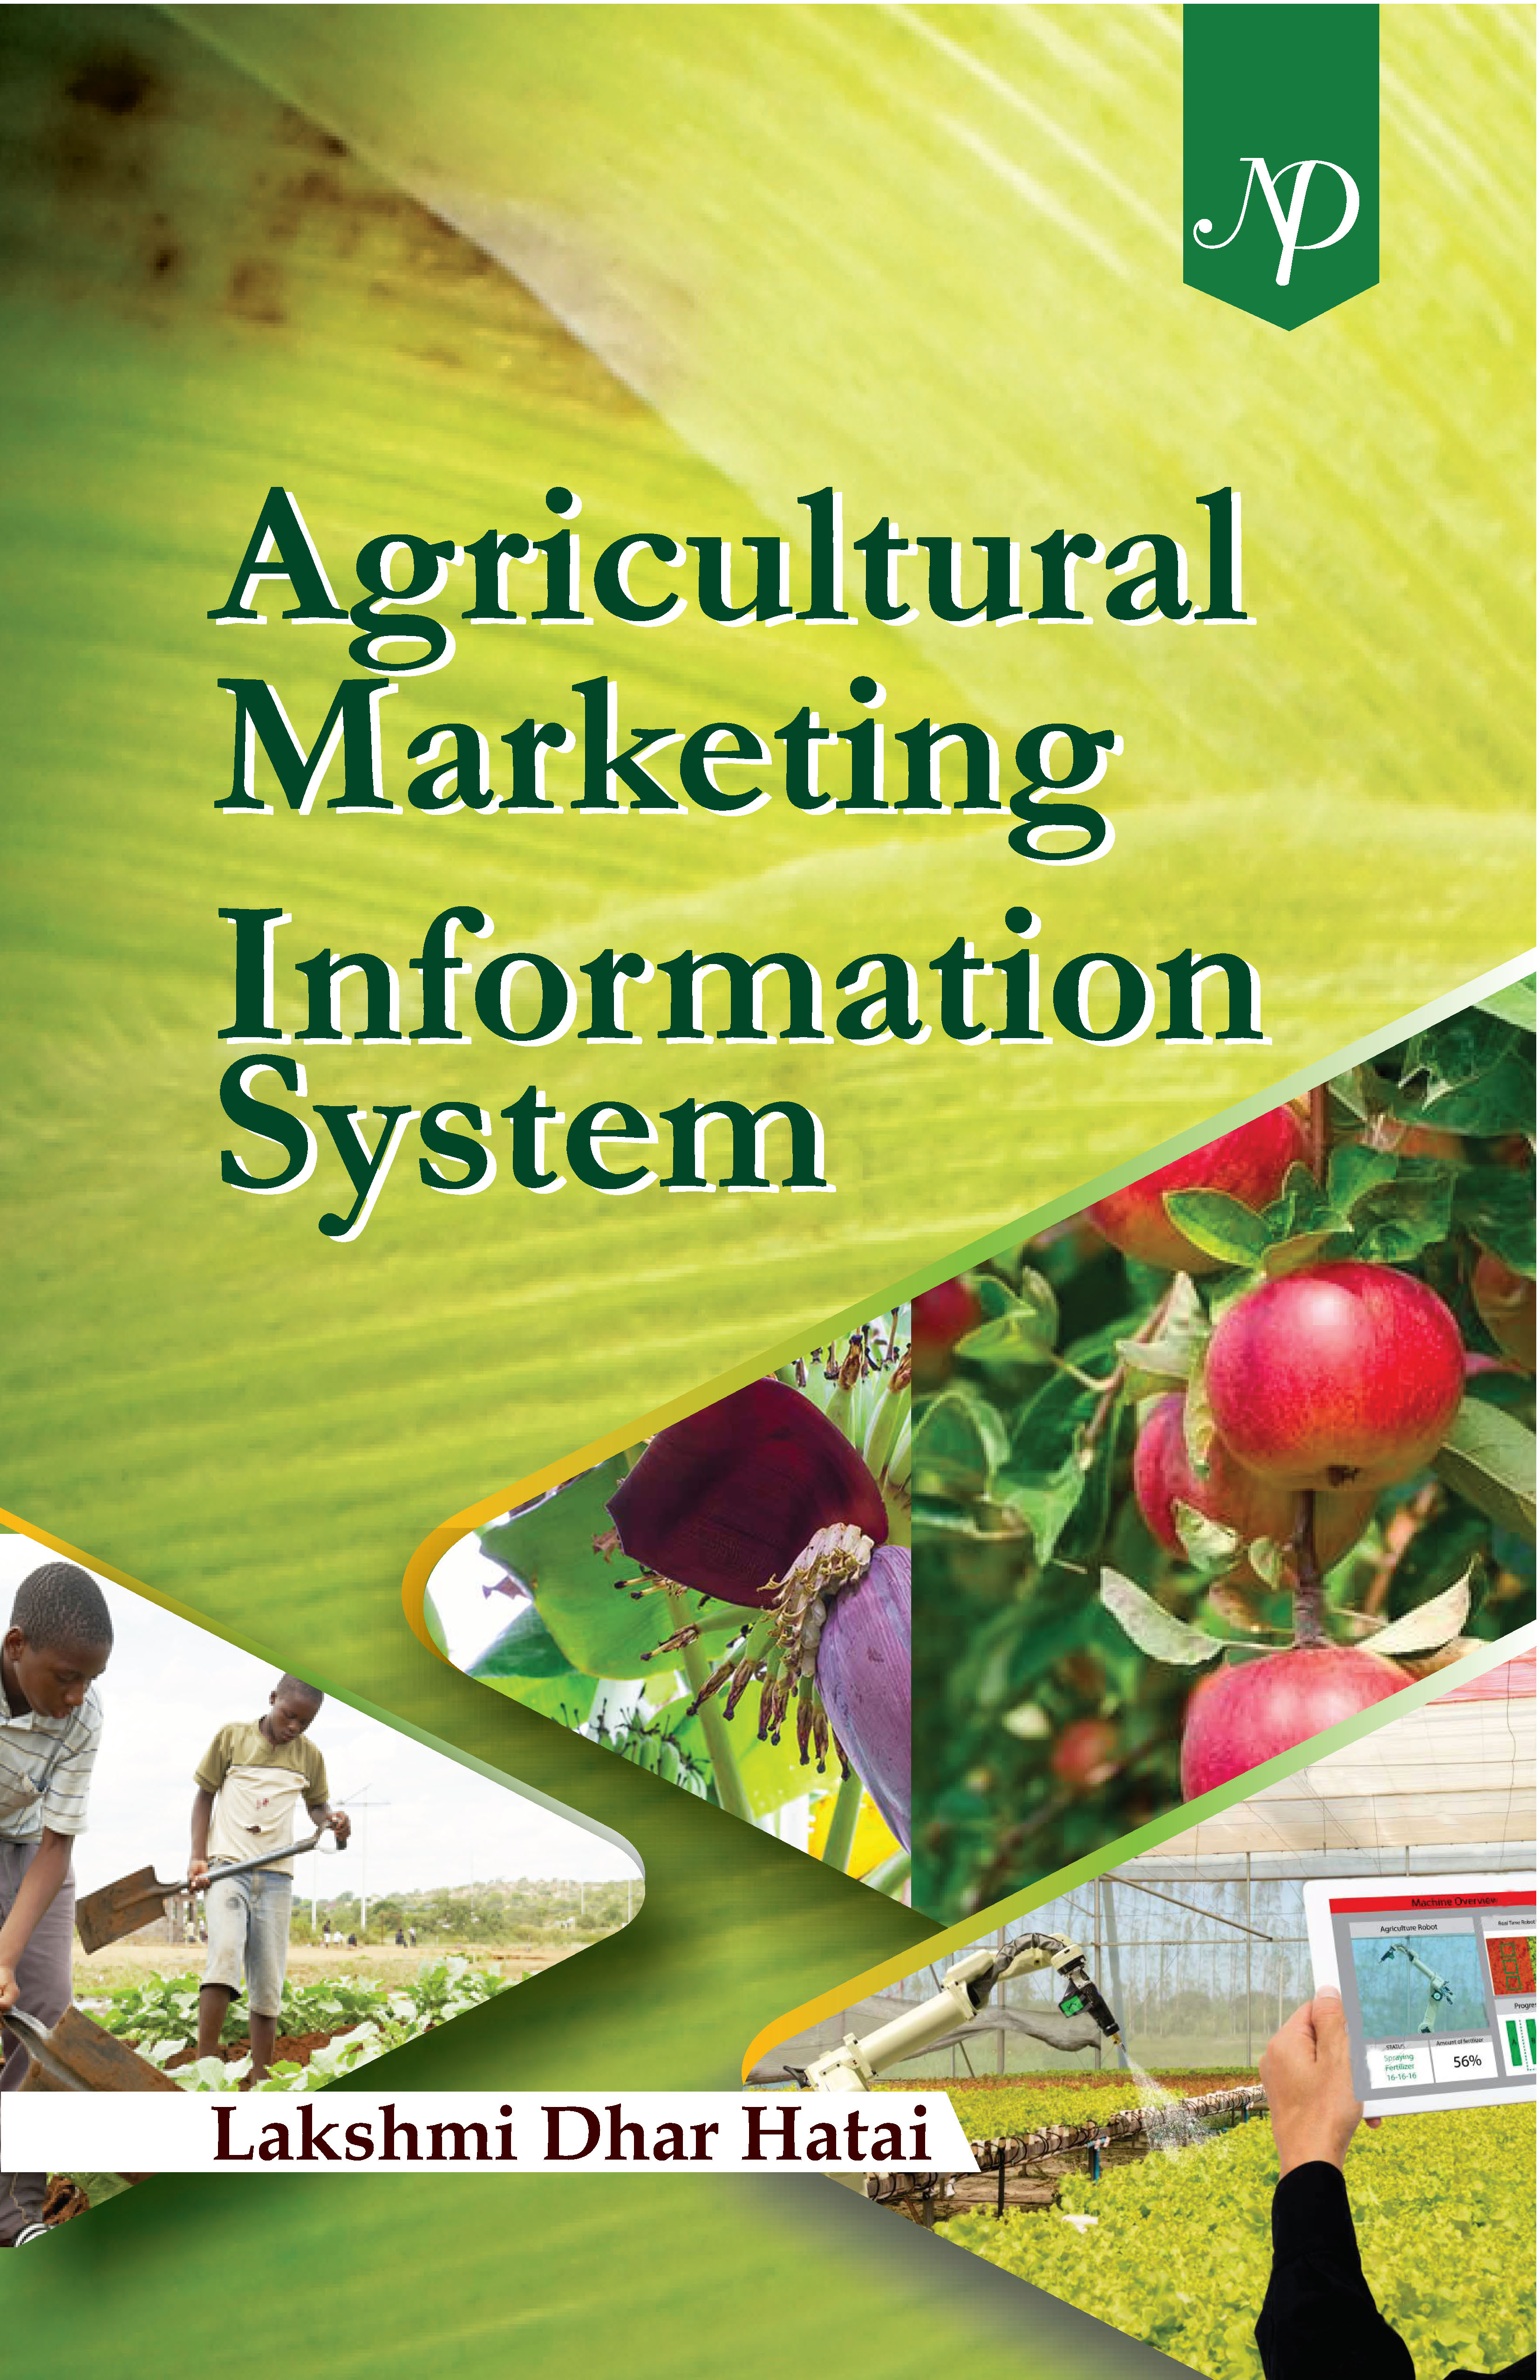 Agricultural Marketing Information System Cover.jpg